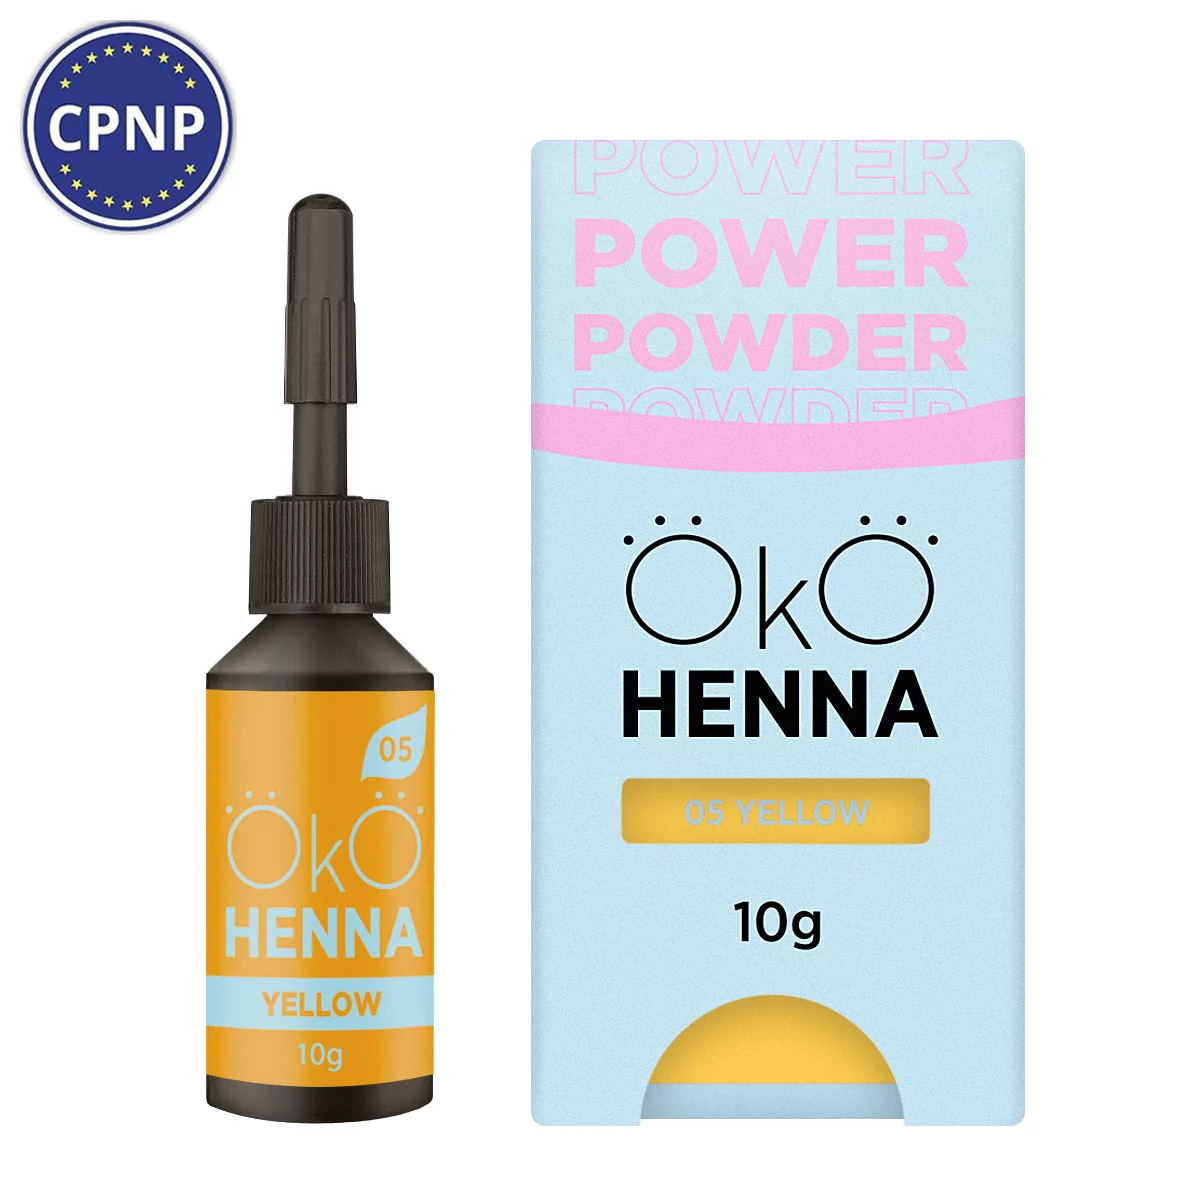 Къна за вежди OKO Power Powder, 05 Yellow, 10g